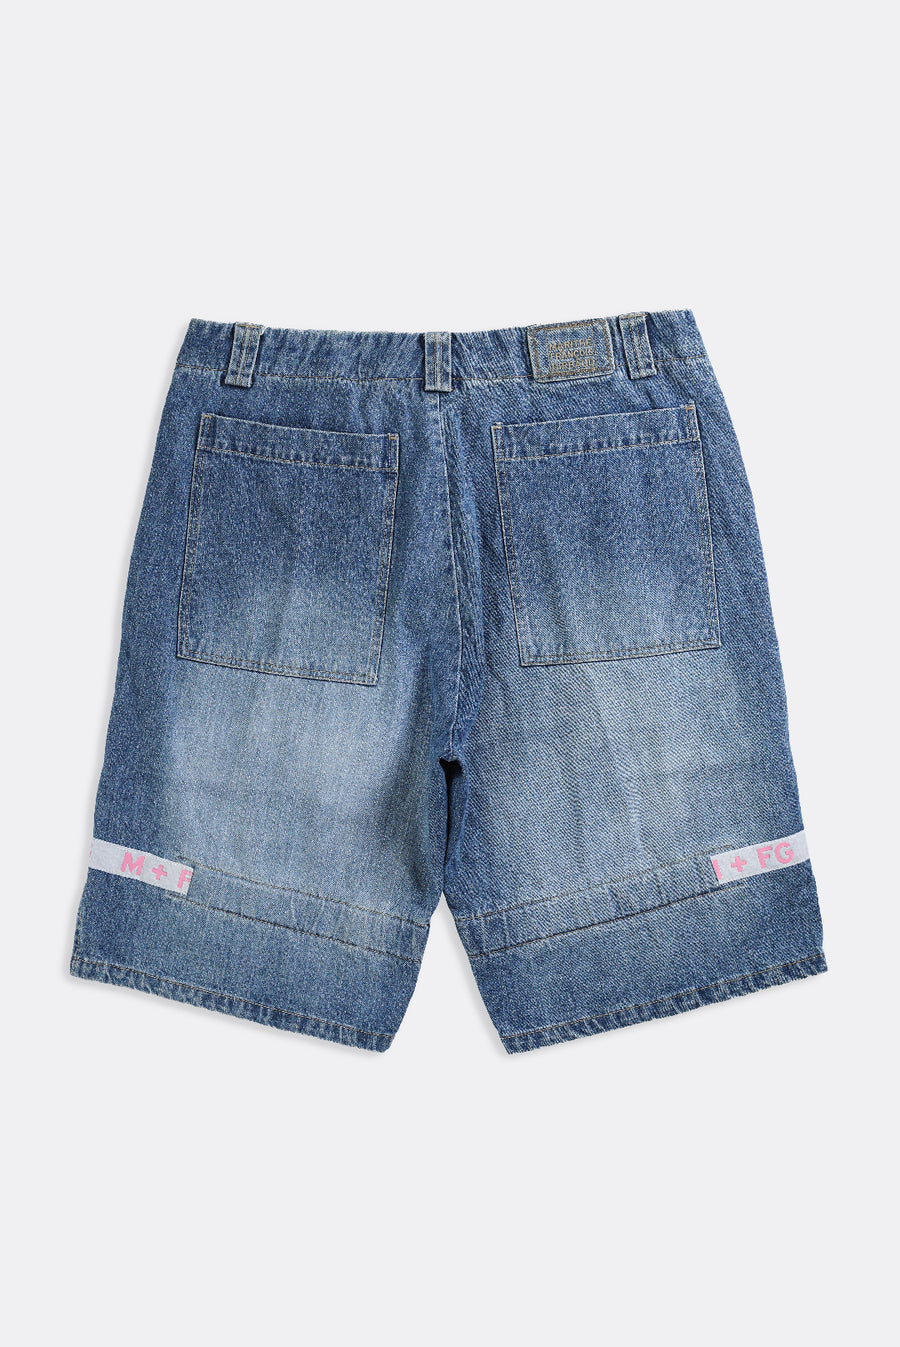 Vintage Girbaud Denim Shorts - W41